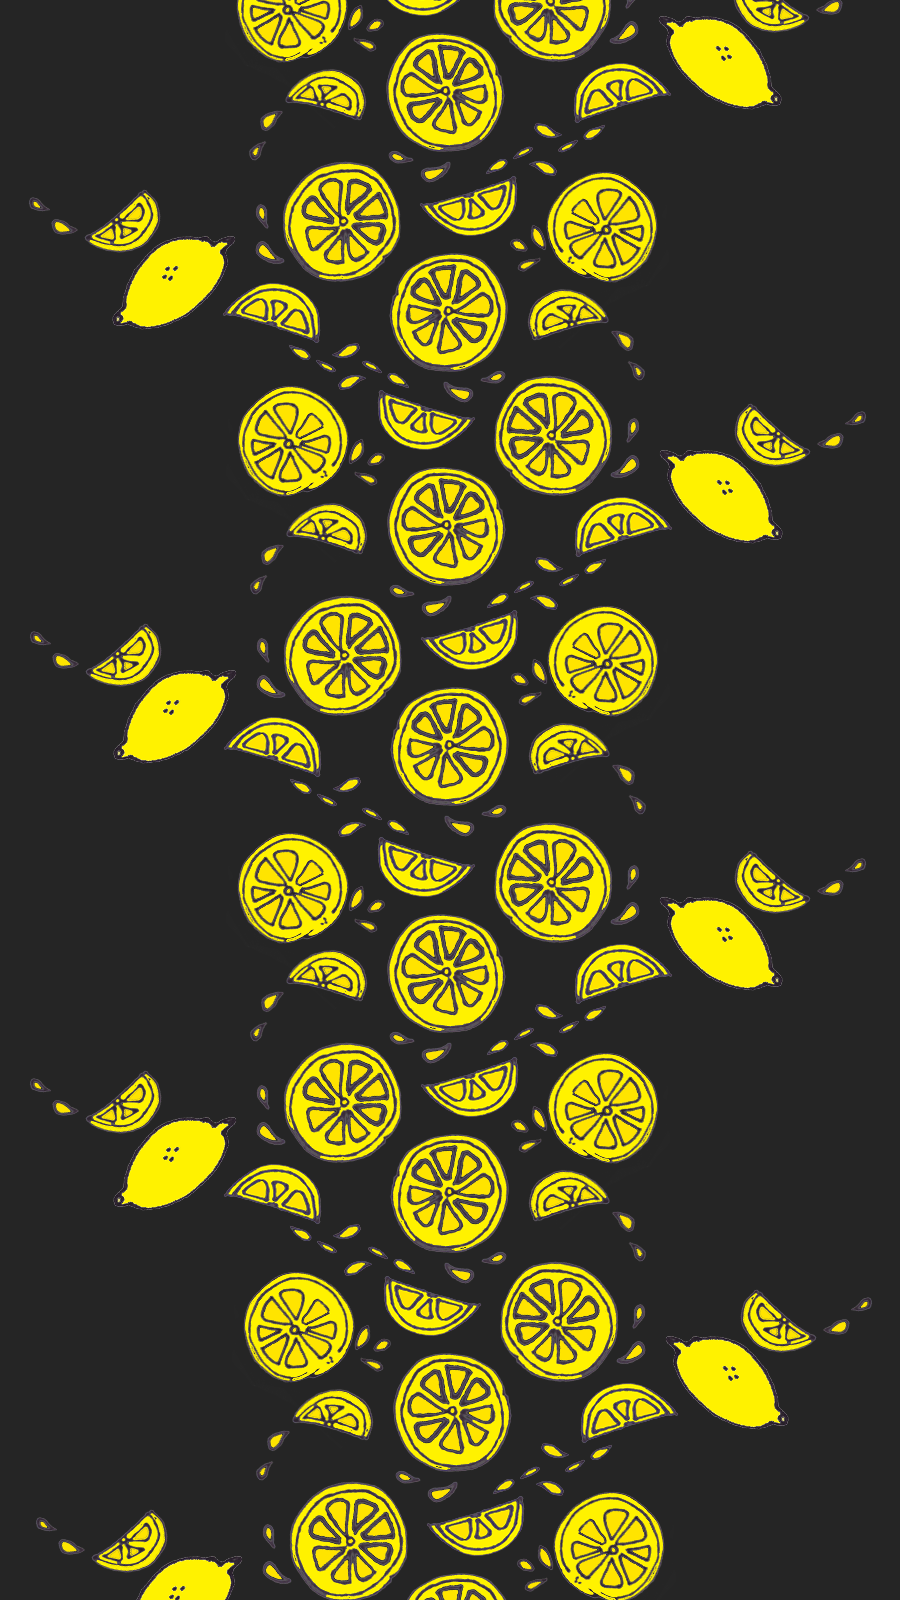 A black and yellow illustration of flying lemons - Lemon, fruit, yellow iphone